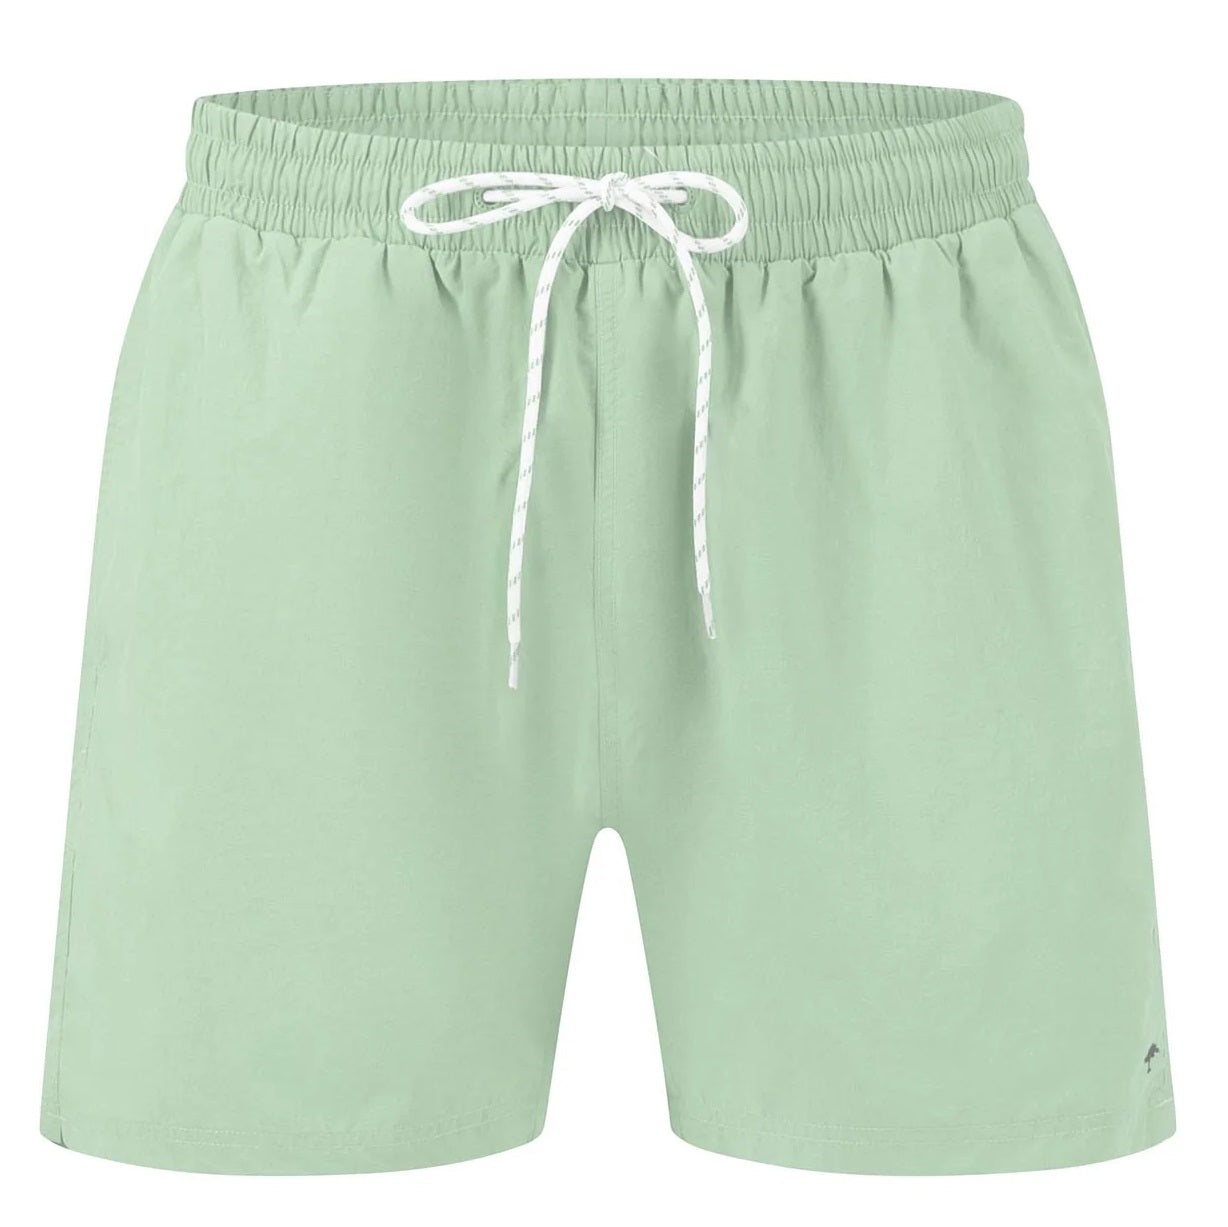 FYNCH HATTON Swim Shorts - Men's – Soft Green